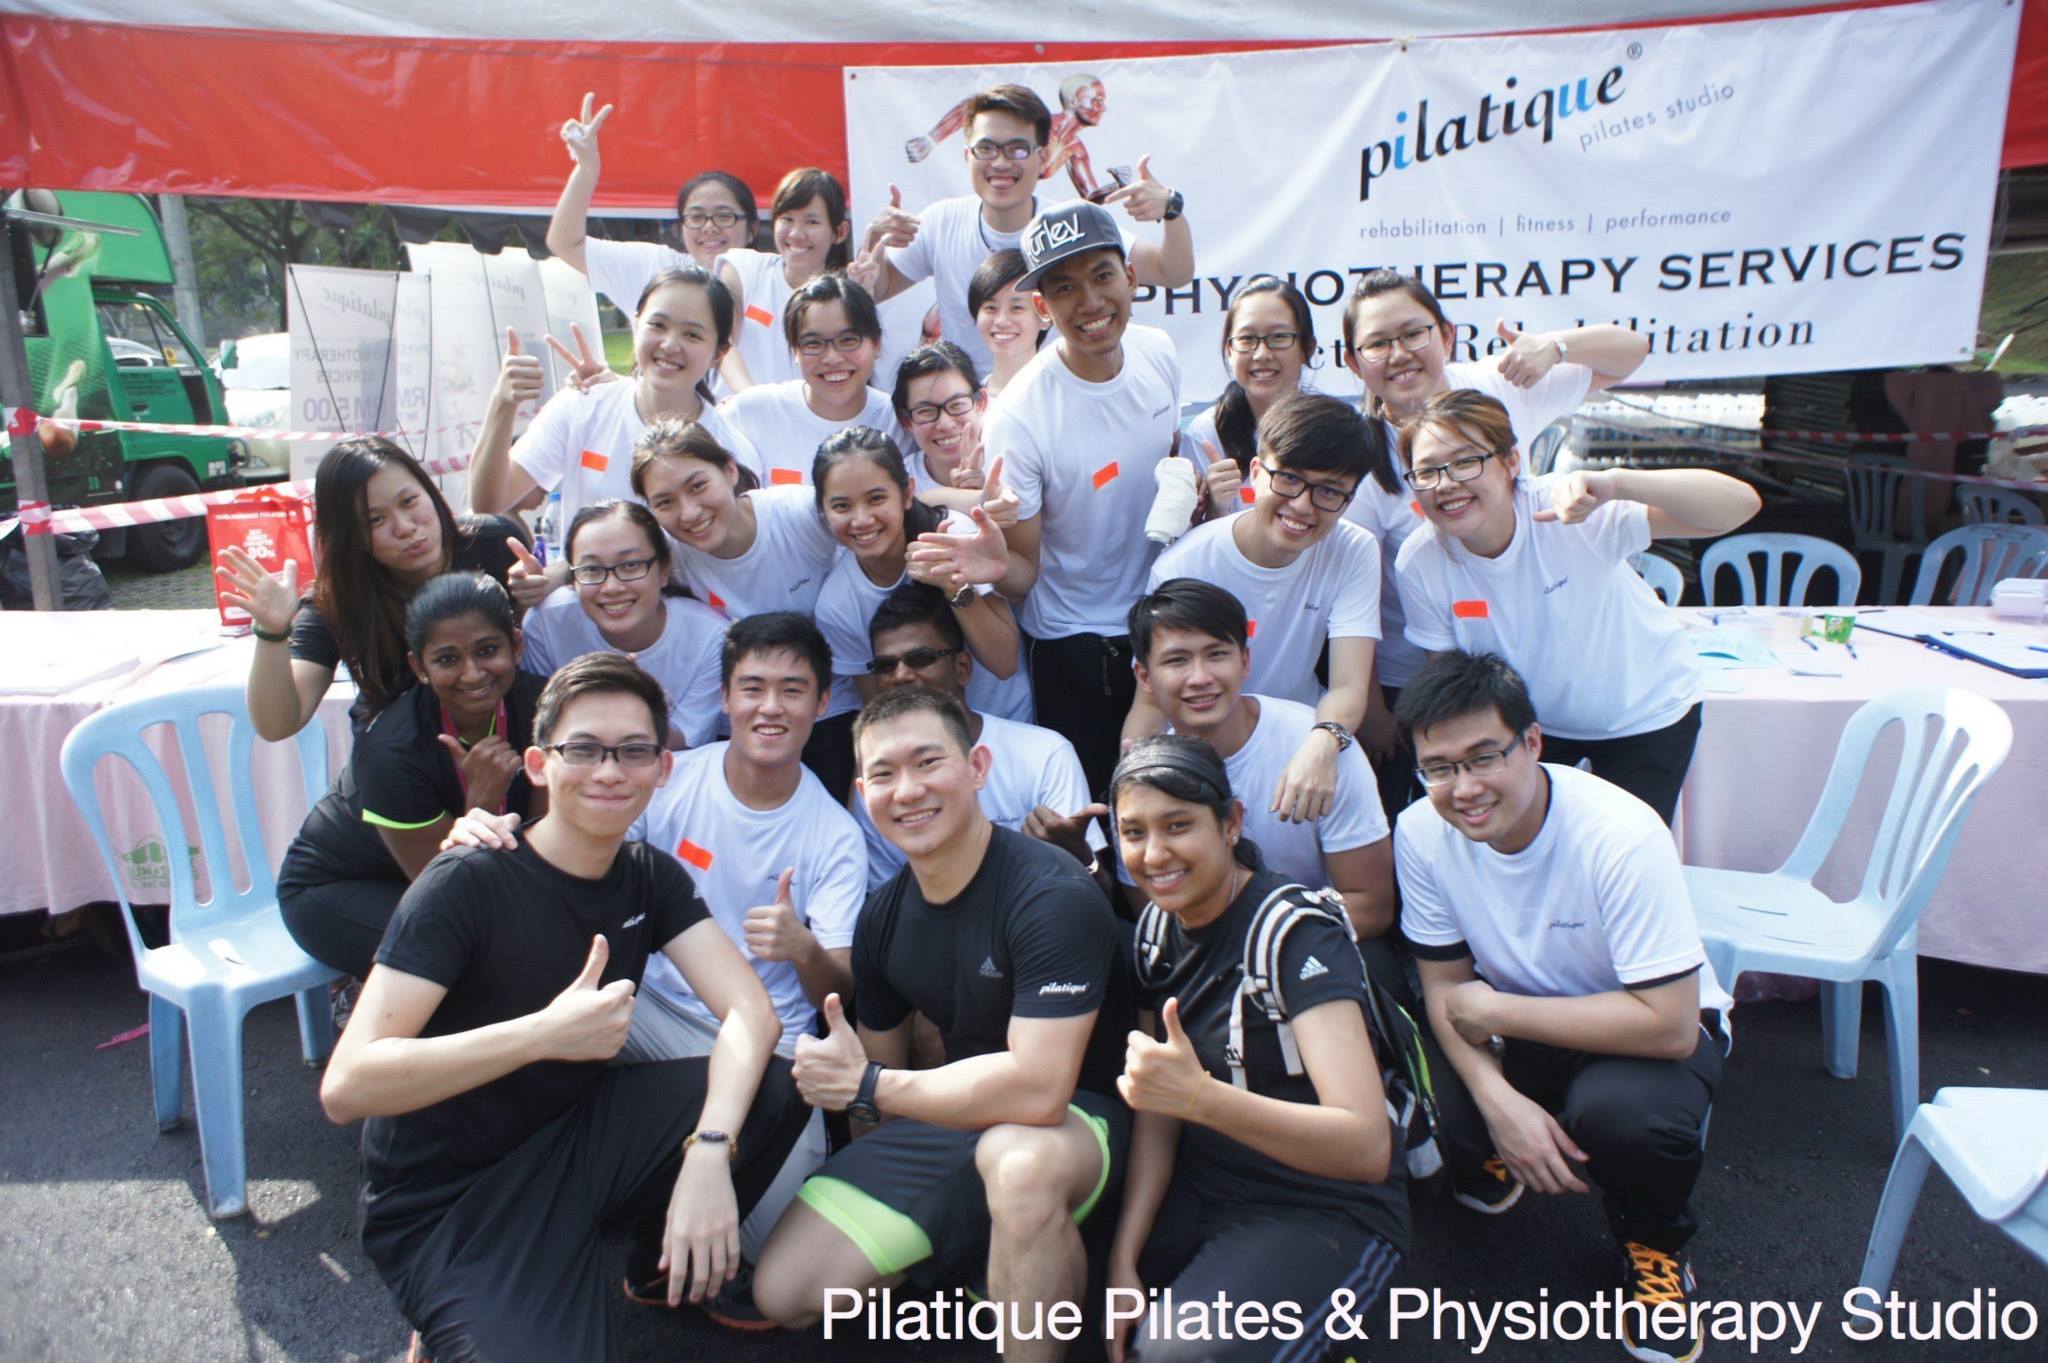 Pilatique Pilates & Physiotherapy Studio 